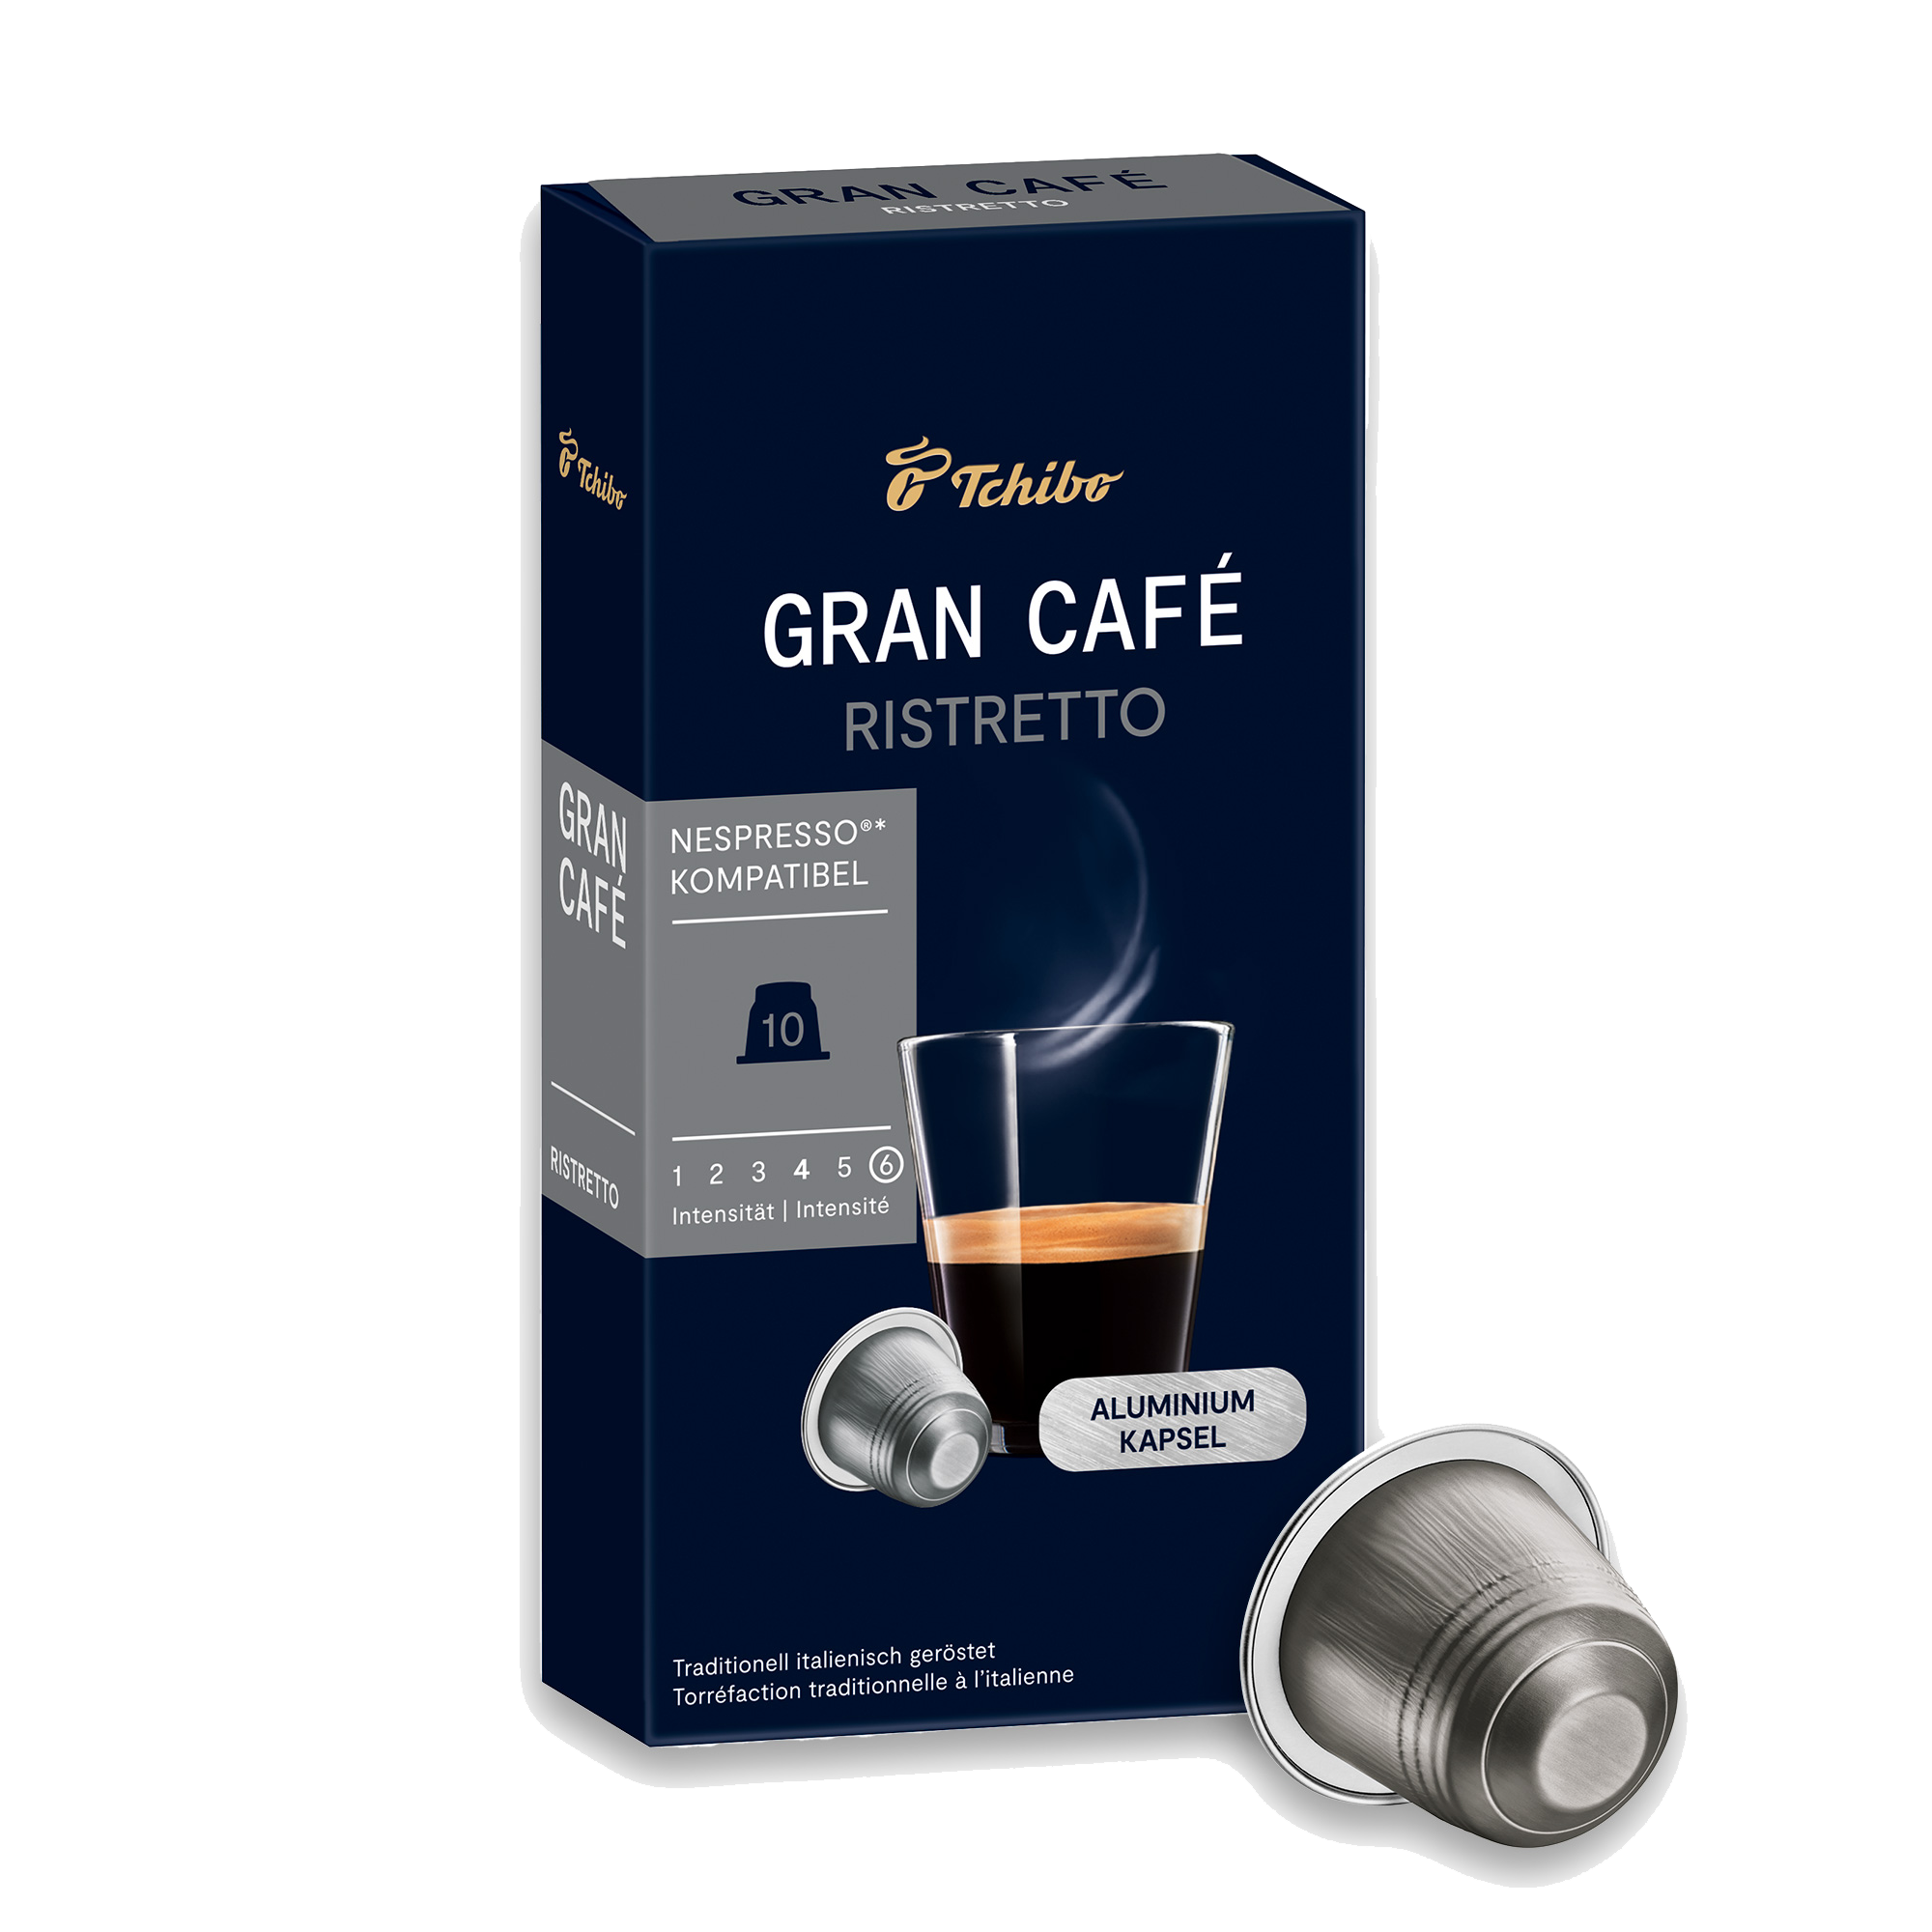 Gran Café Ristretto -Strong ristretto with a fine bitter aroma and